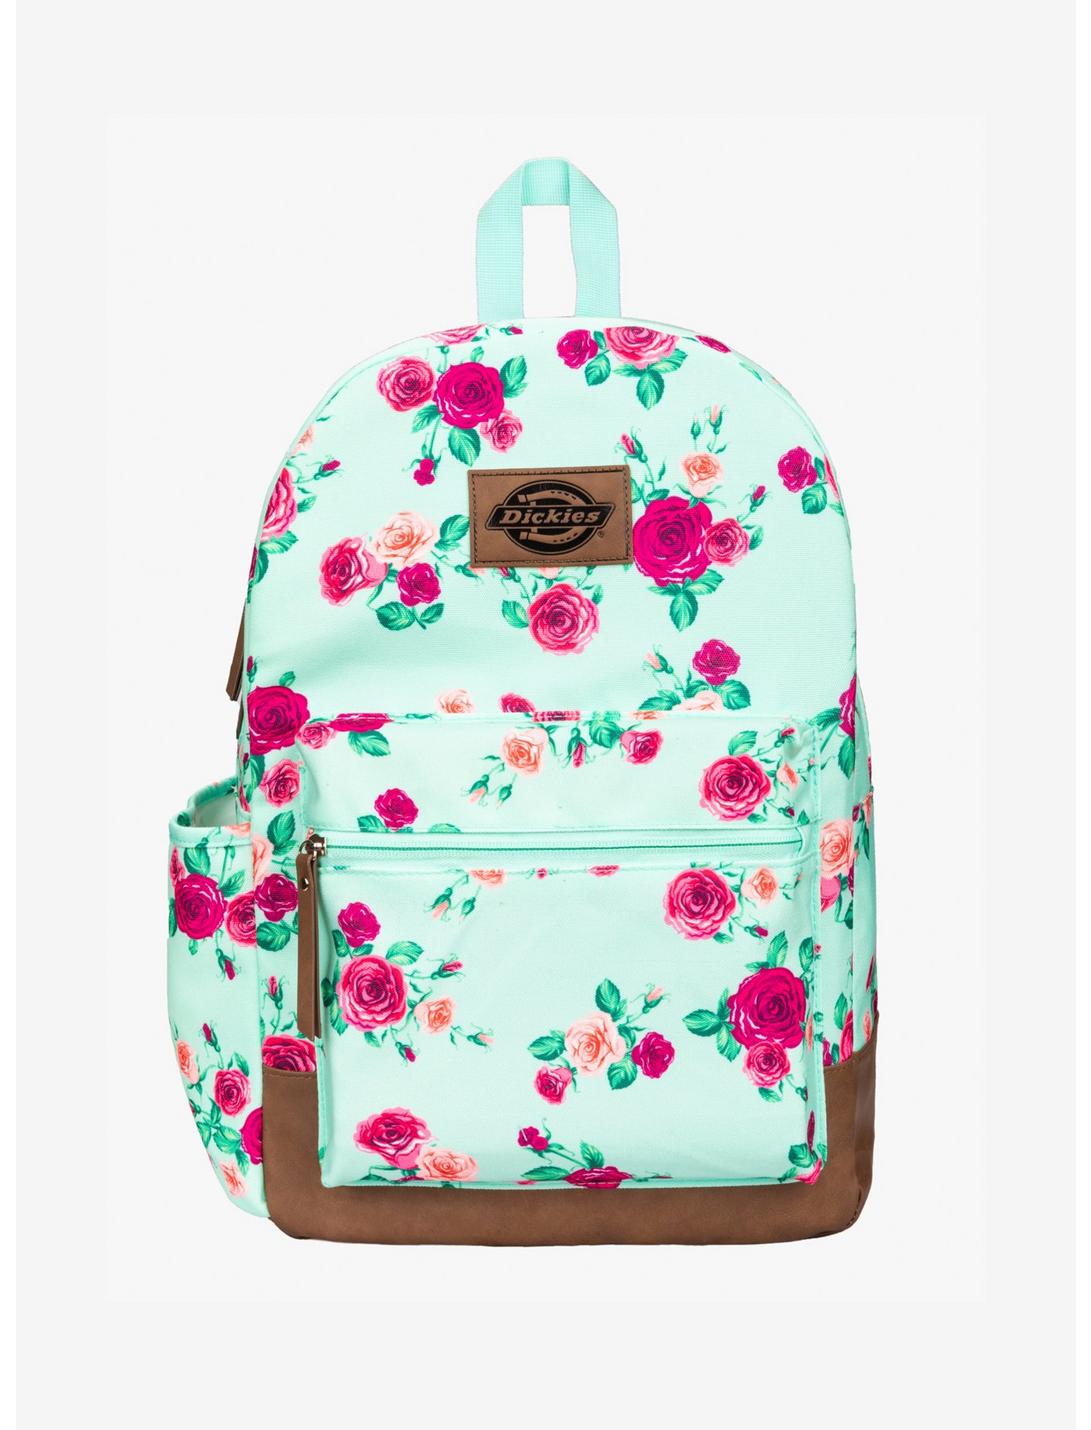 Dickies Mint Floral Canvas Backpack, , hi-res